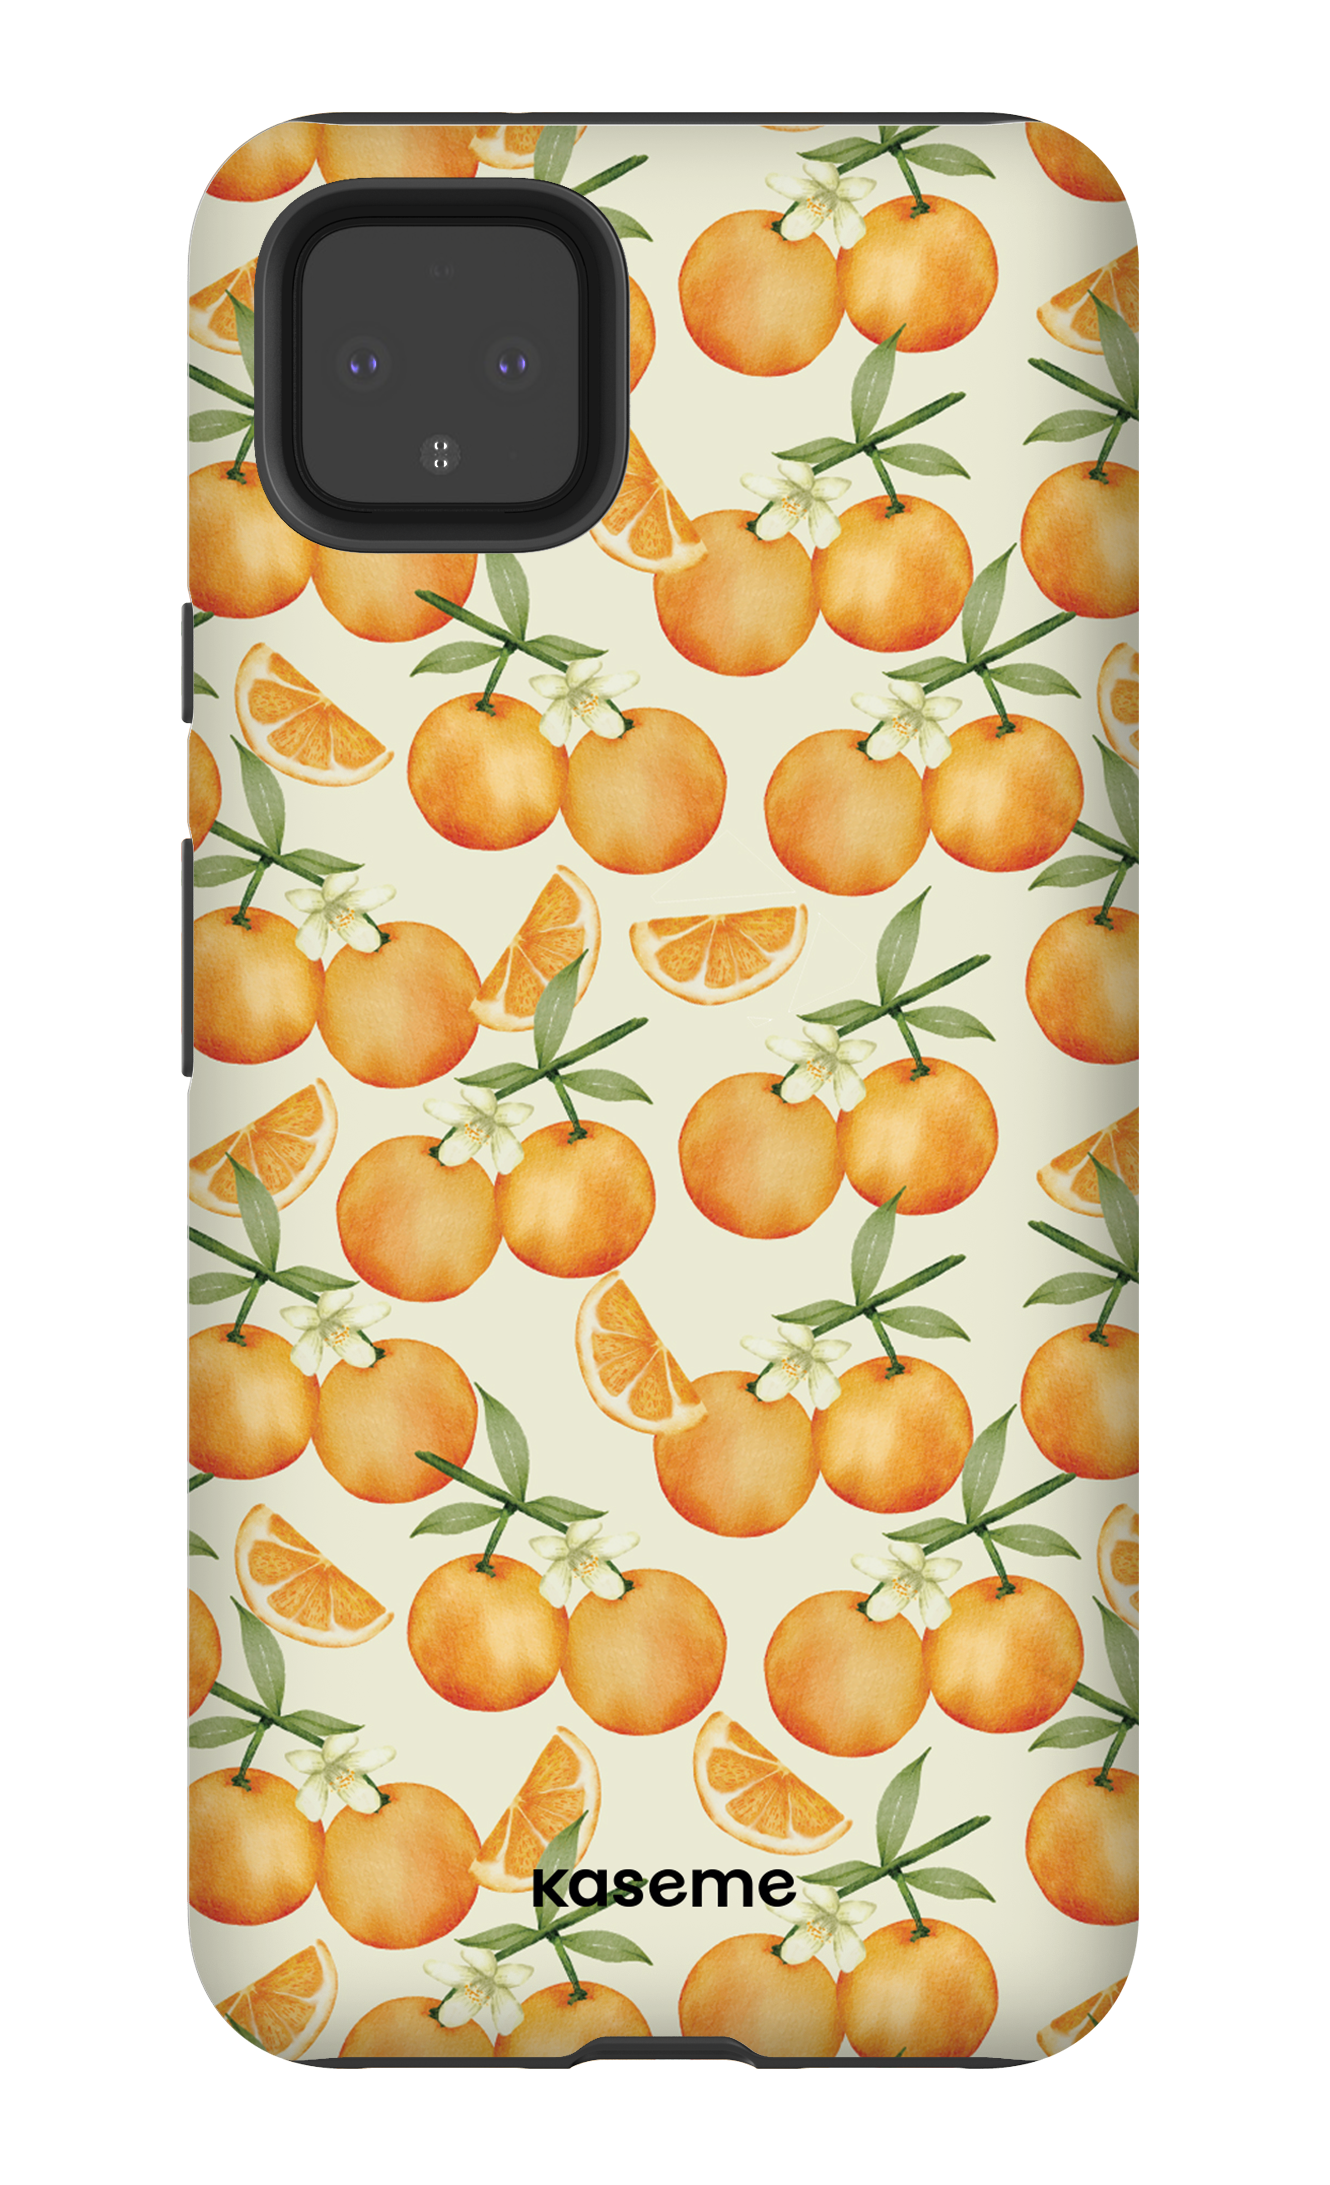 Tangerine - Google Pixel 4 XL